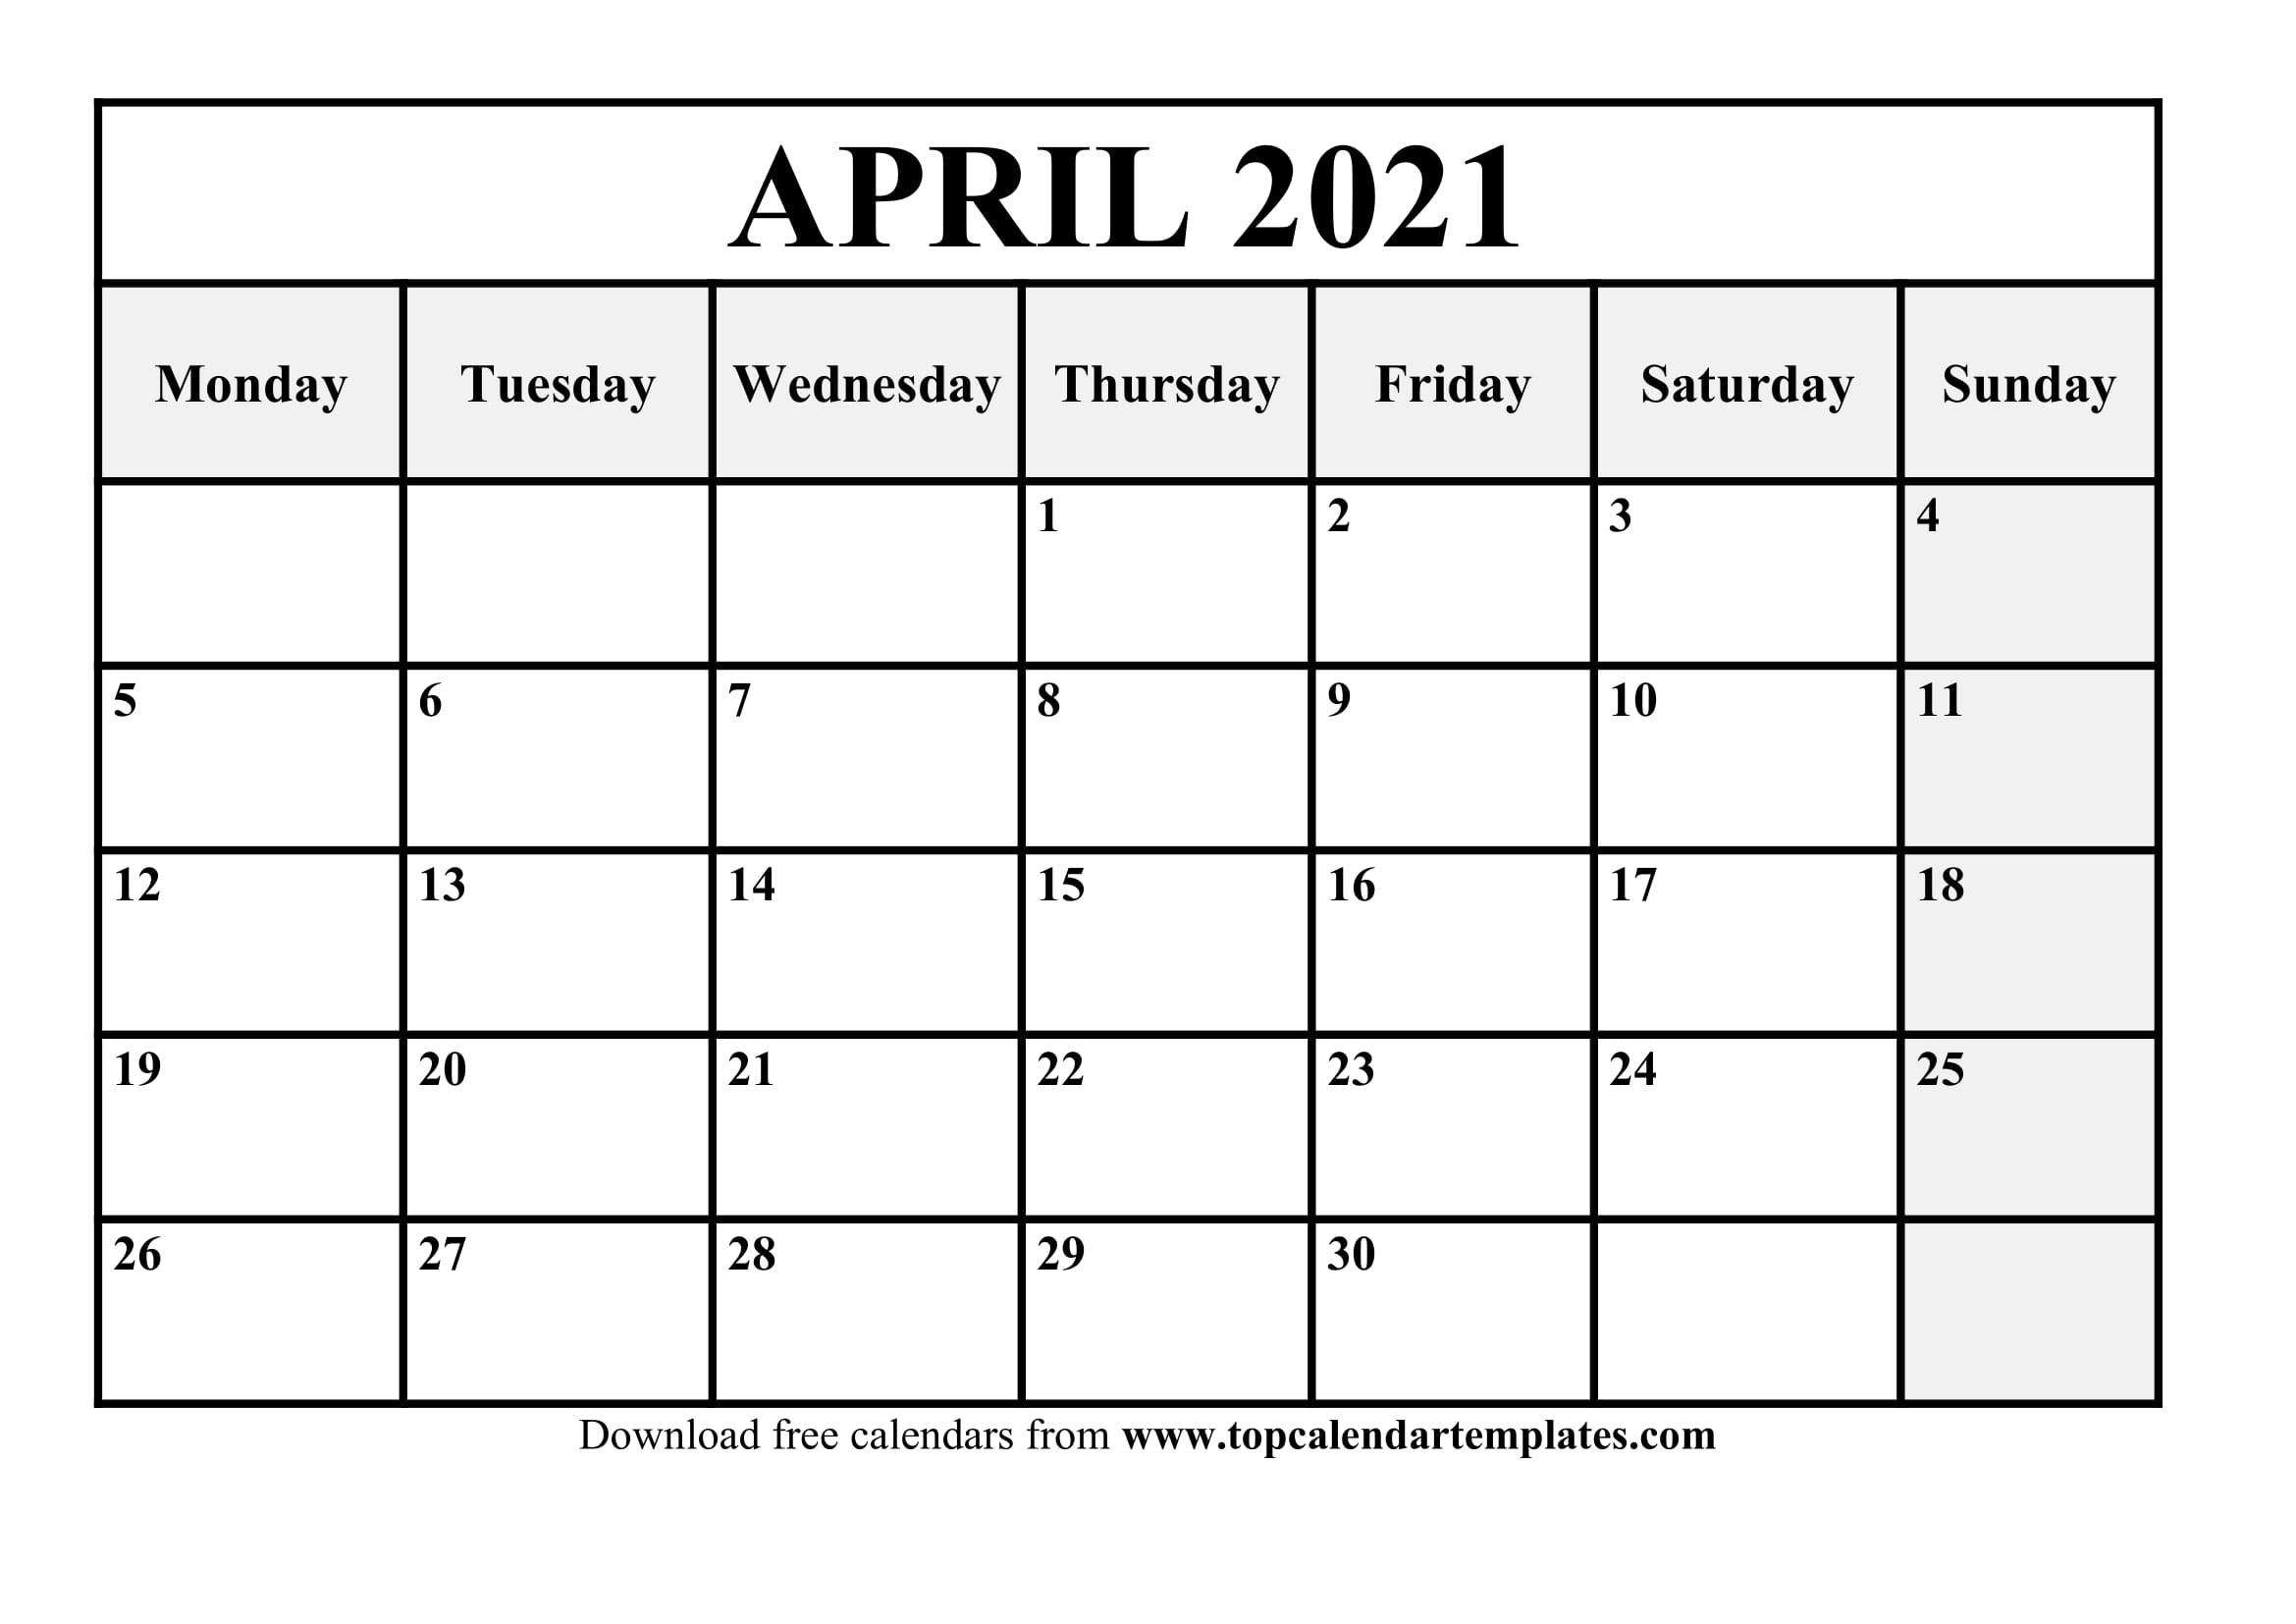 Free April 2021 Printable Calendar In Editable Format-Blank April 2021 Calendar